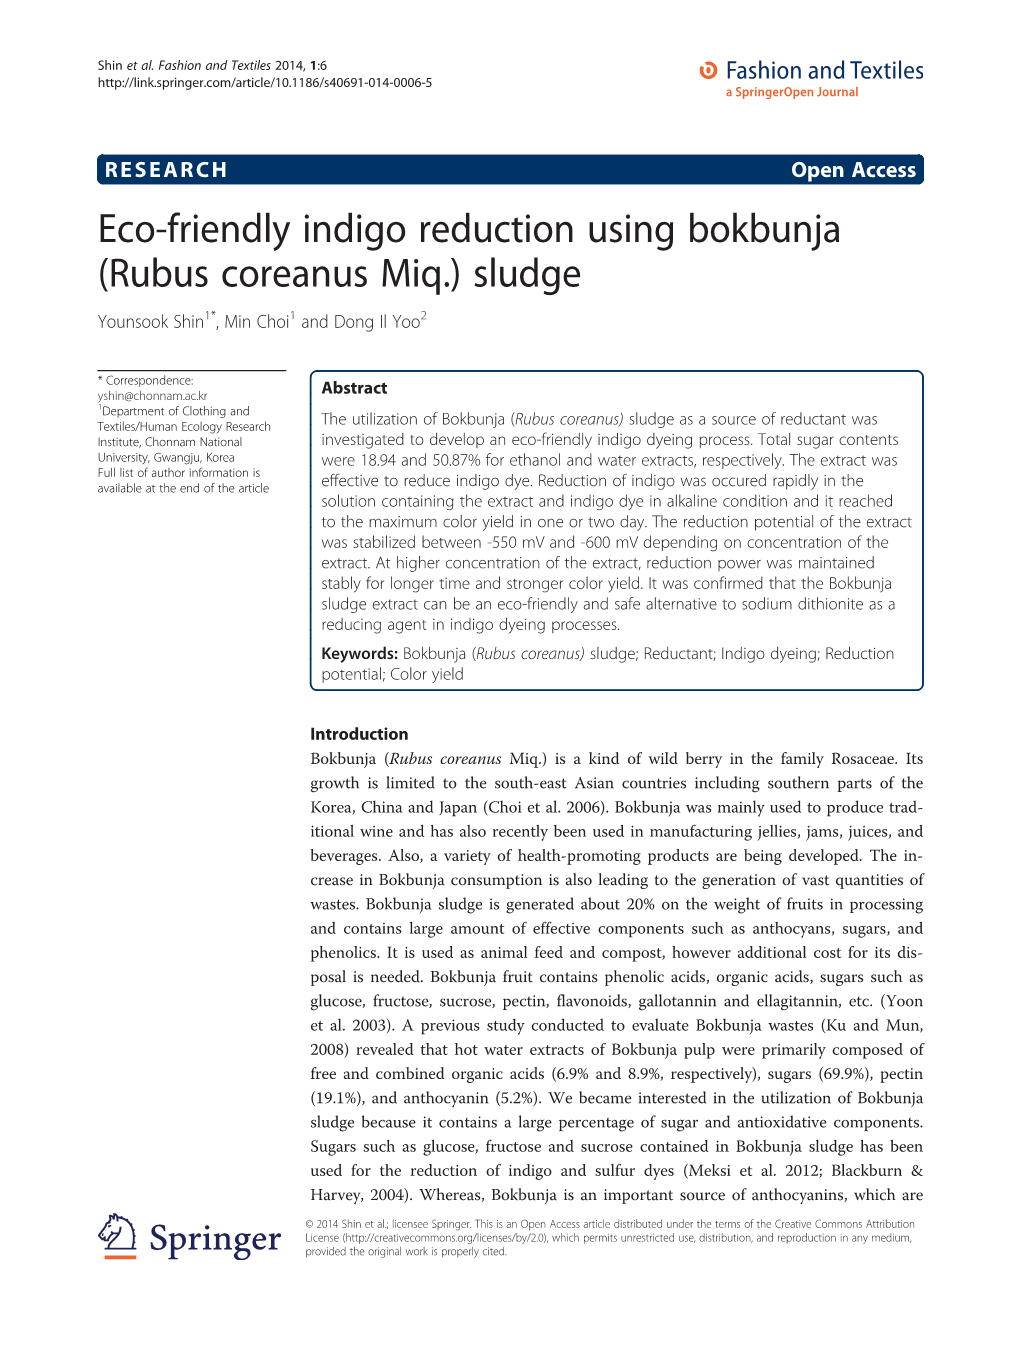 Eco-Friendly Indigo Reduction Using Bokbunja (Rubus Coreanus Miq.) Sludge Younsook Shin1*, Min Choi1 and Dong Il Yoo2